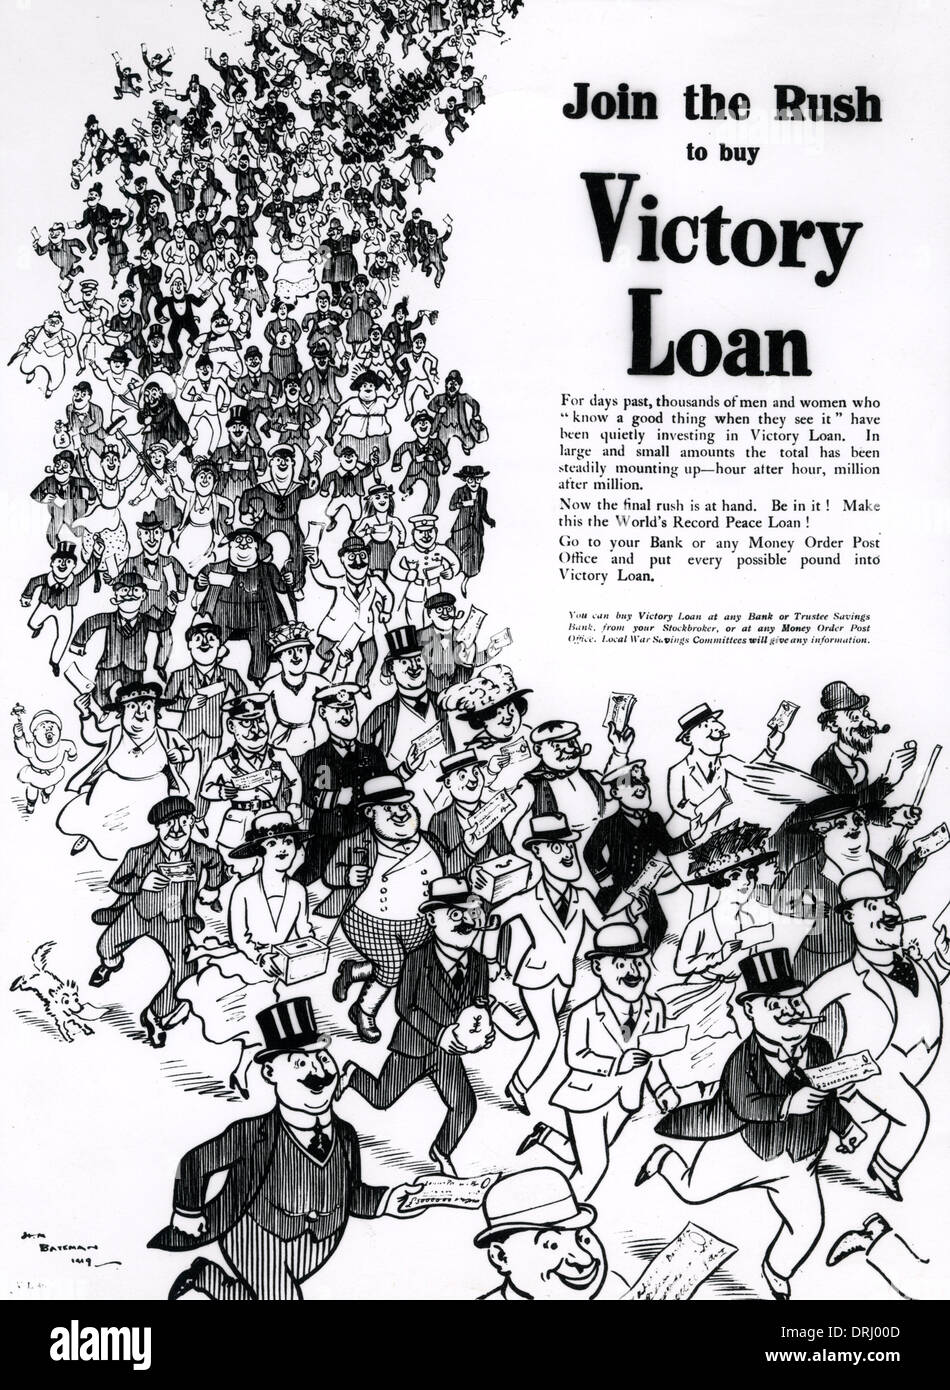 British Victory Loan advertisement, WW1 Stock Photo